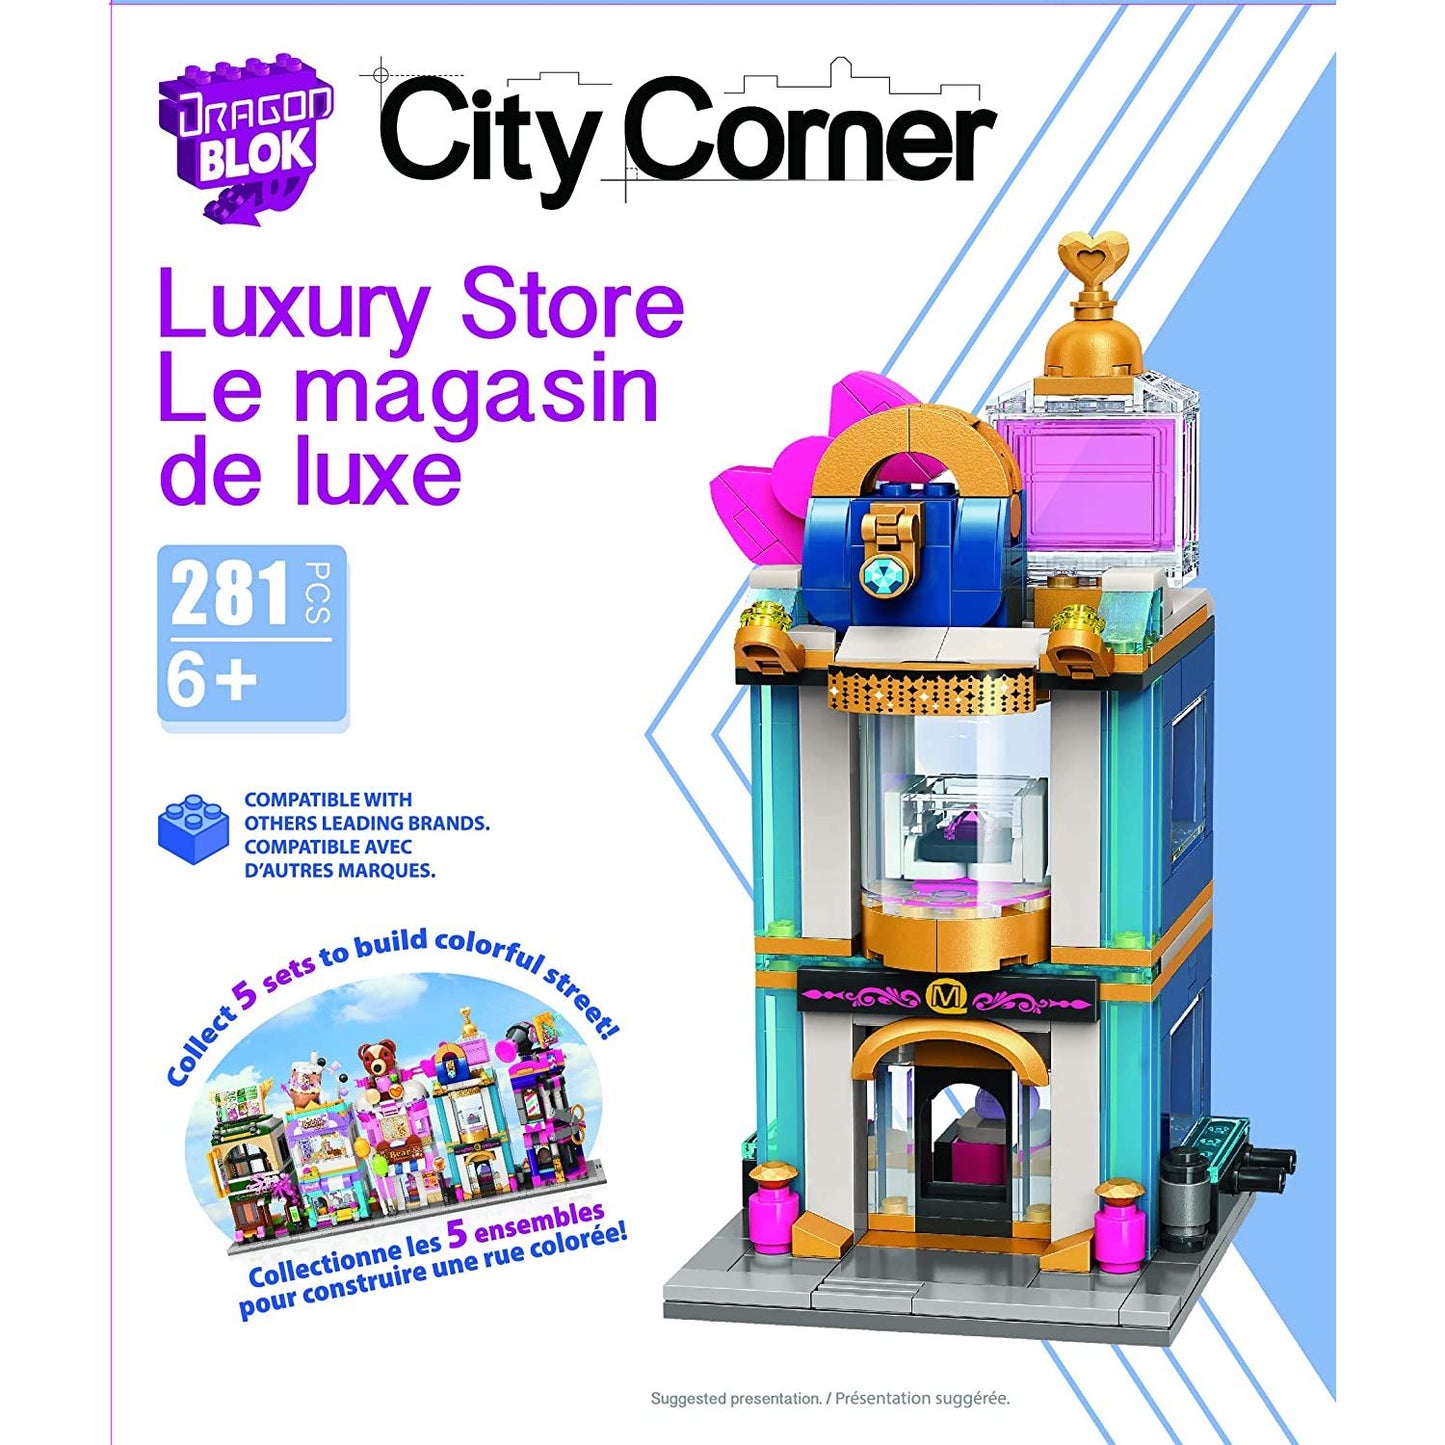 Dragon Blok - City Corner - Luxury Store - 281 Pieces Toy Building Set